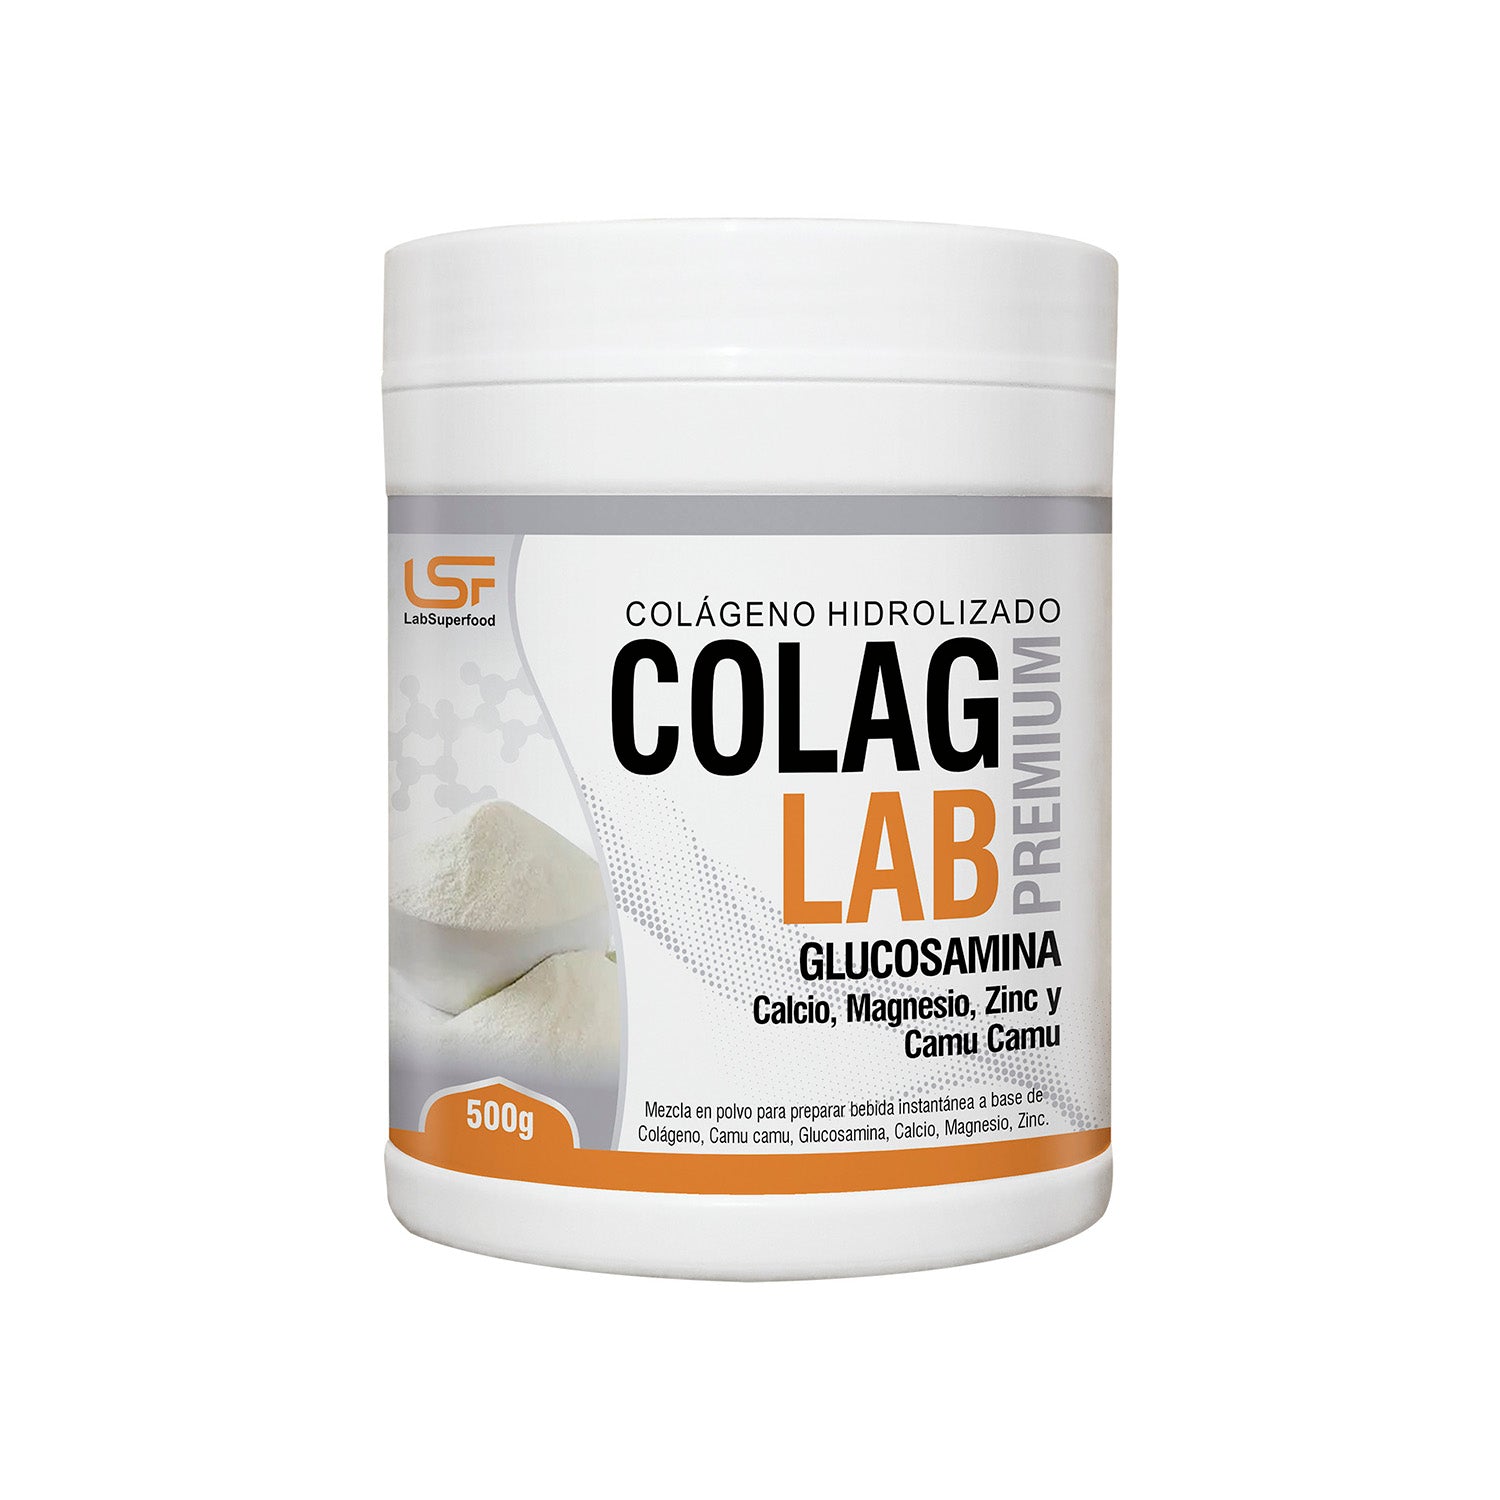 Colag Lab con Glucosamina - 500g